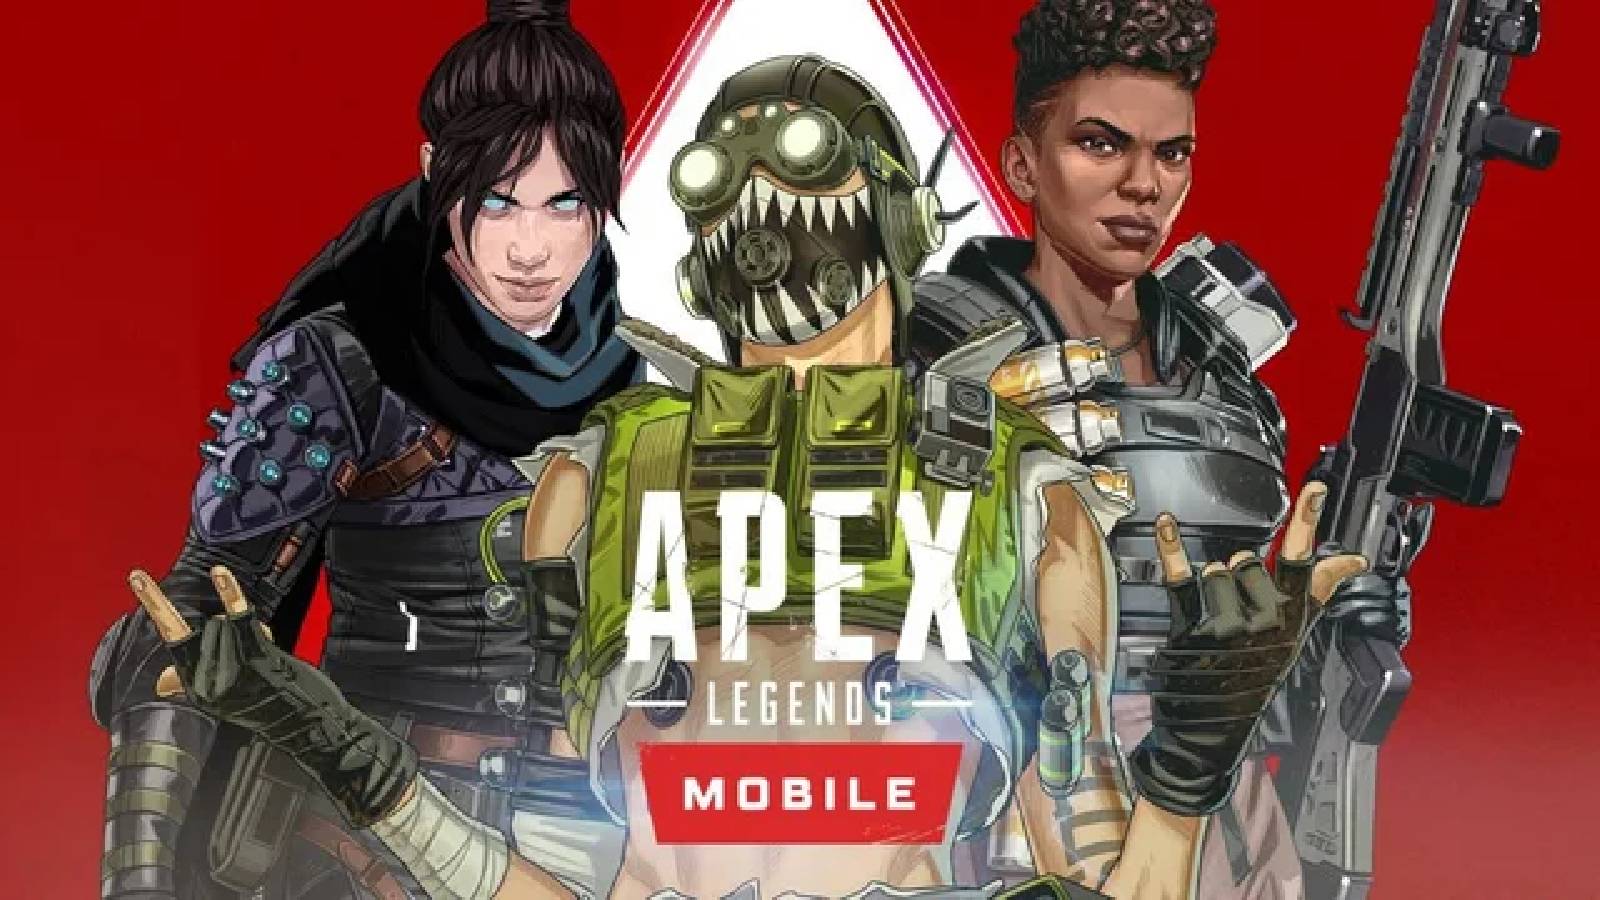 Apex Legends Mobile earned $4.8 million in revenue